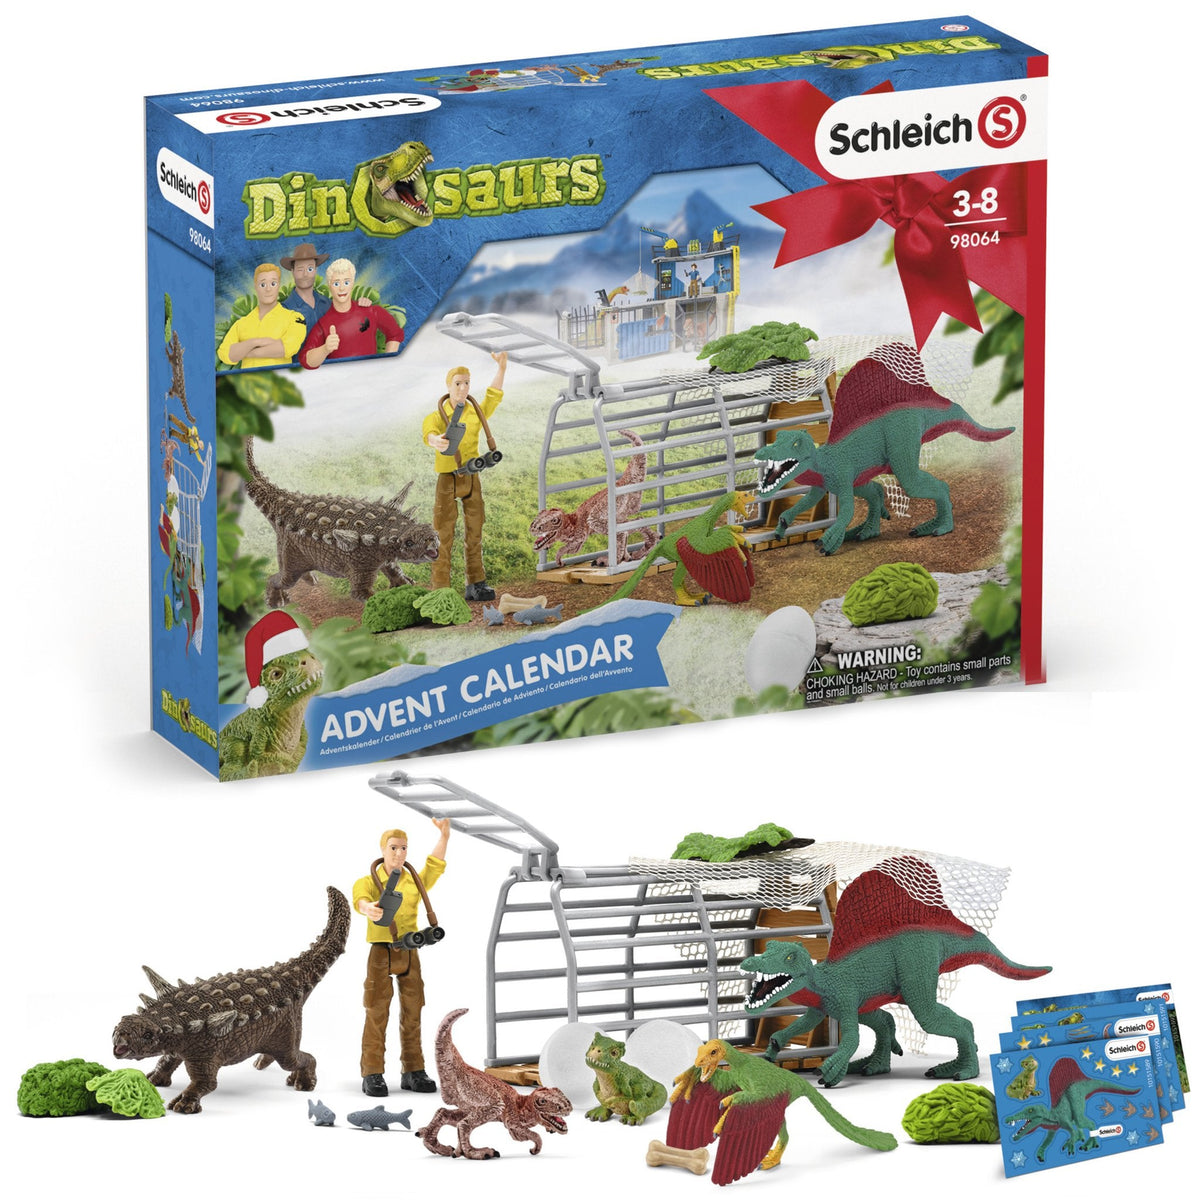 Schleich Dinosaurs Advent Calendar 2020 Pre Sale Animal Kingdoms Toy